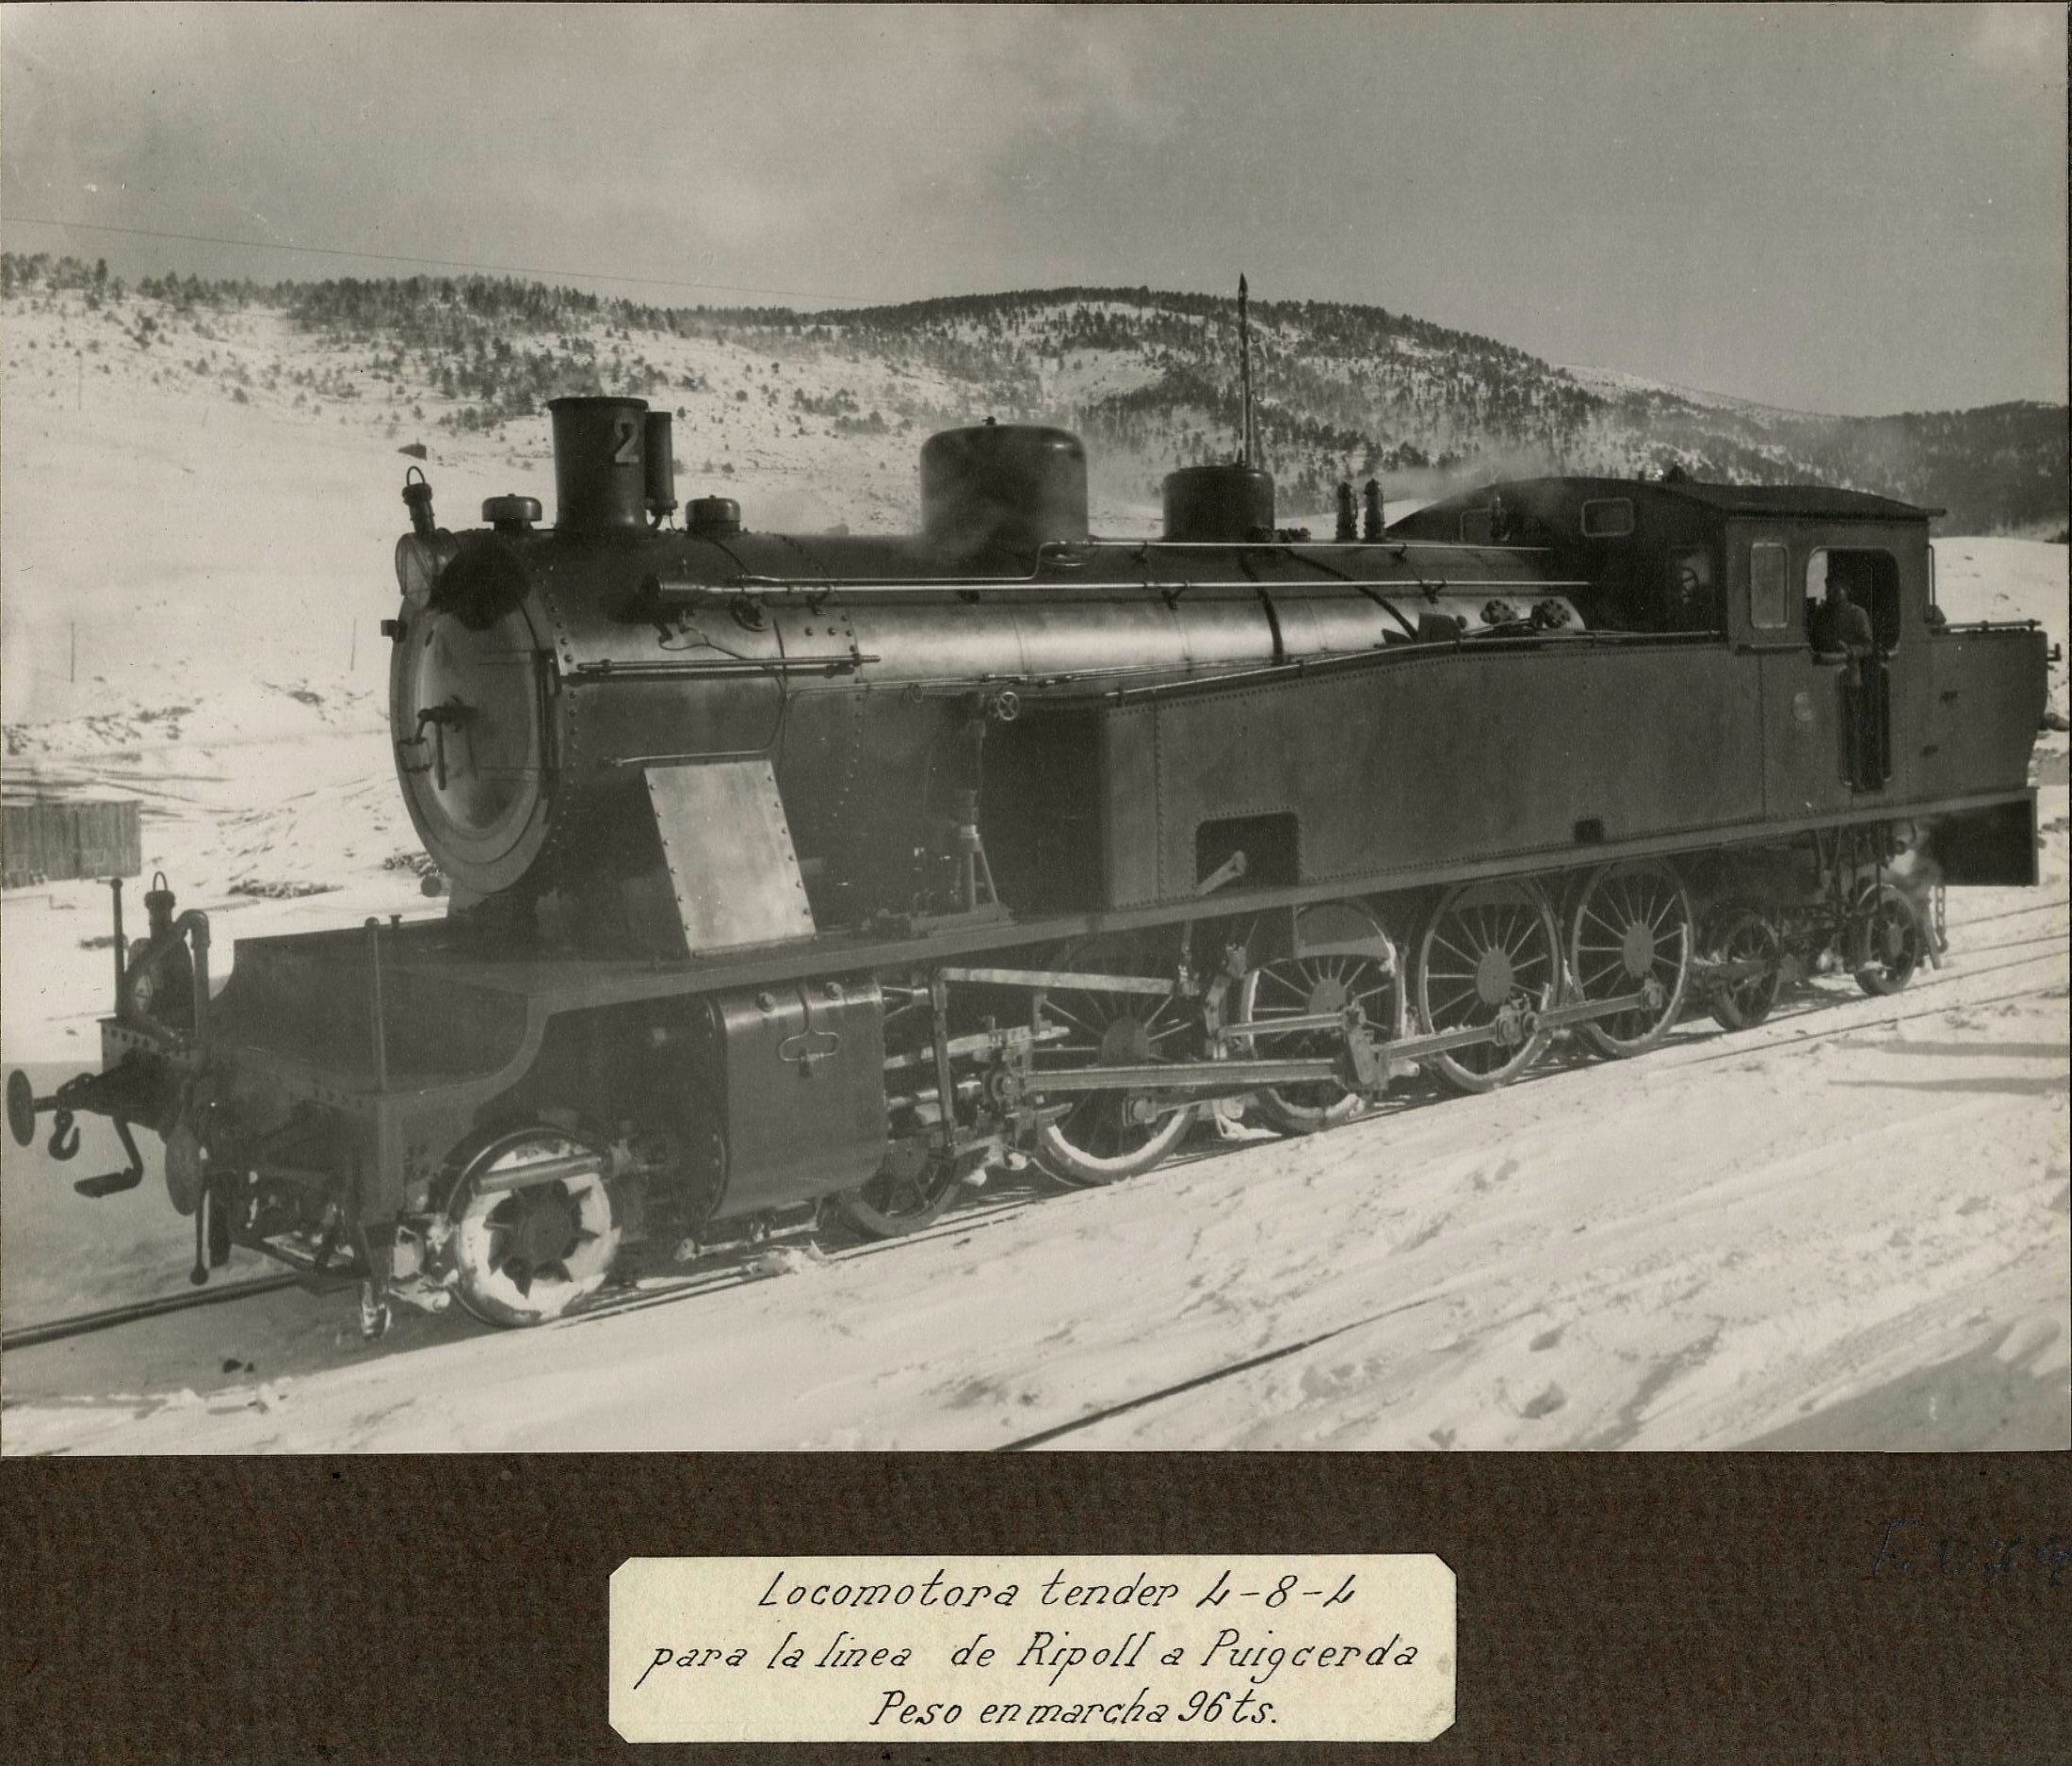 Locomotora Tender 4-8-4. 1920